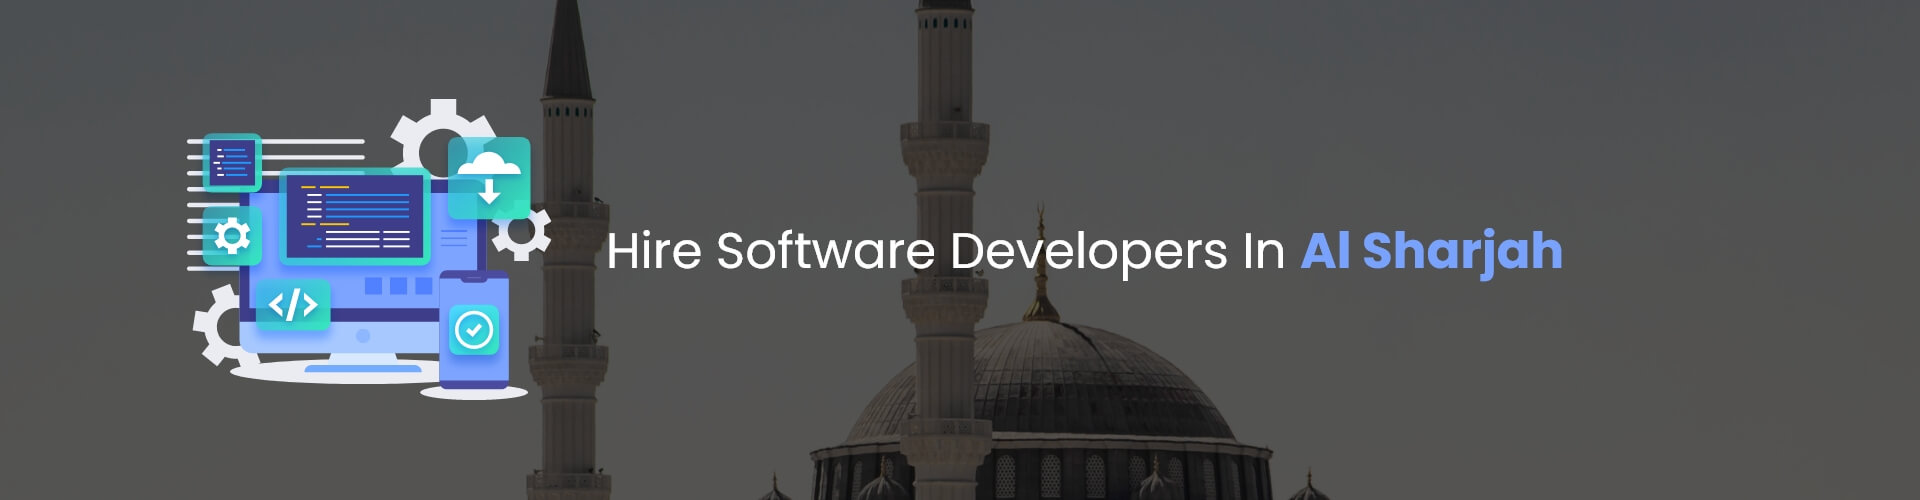 software developers in al sharjah